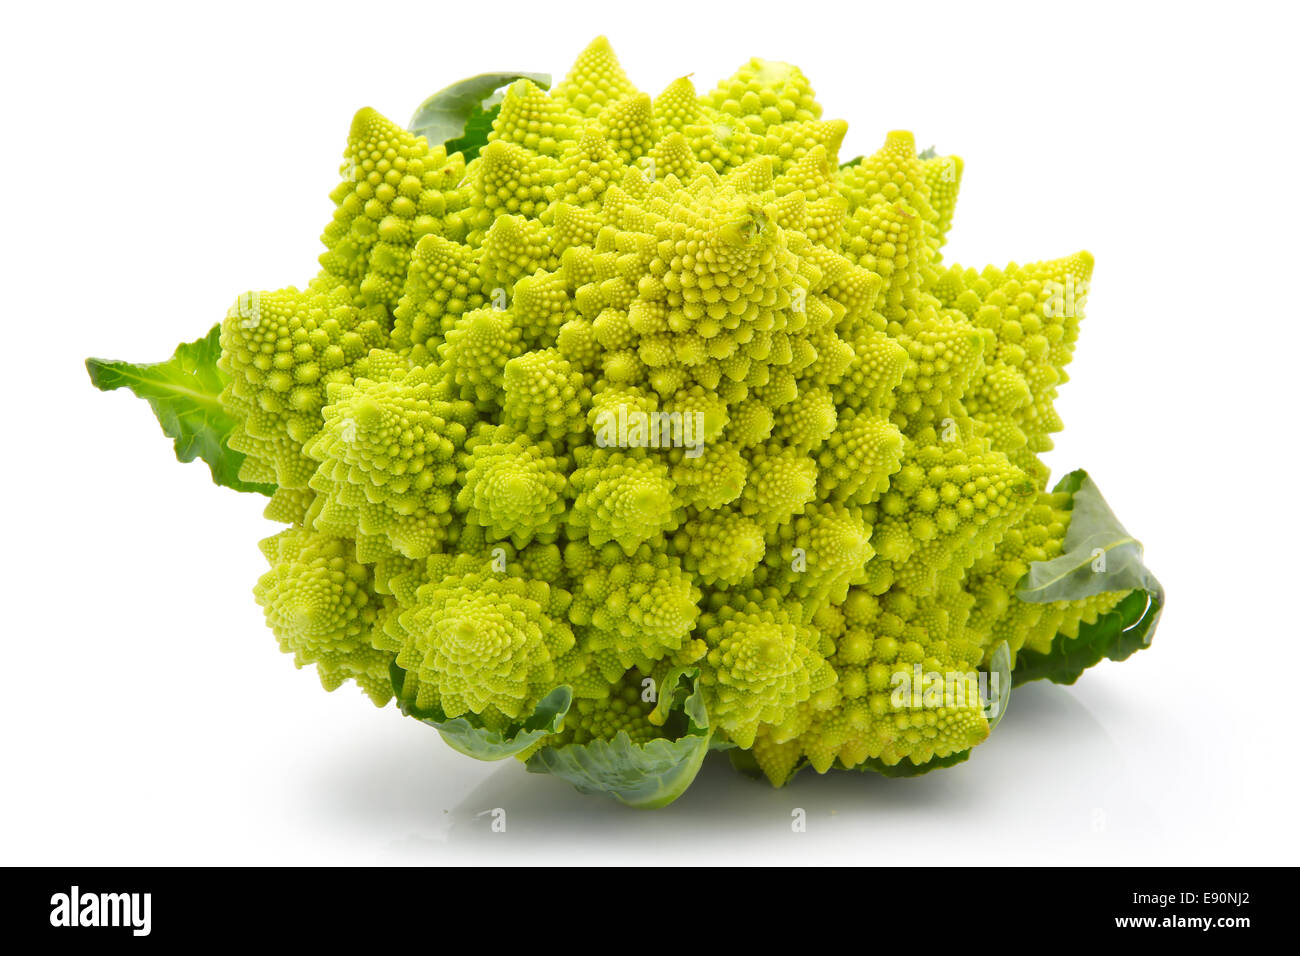 Romanesco broccoli cabbage isolated Stock Photo